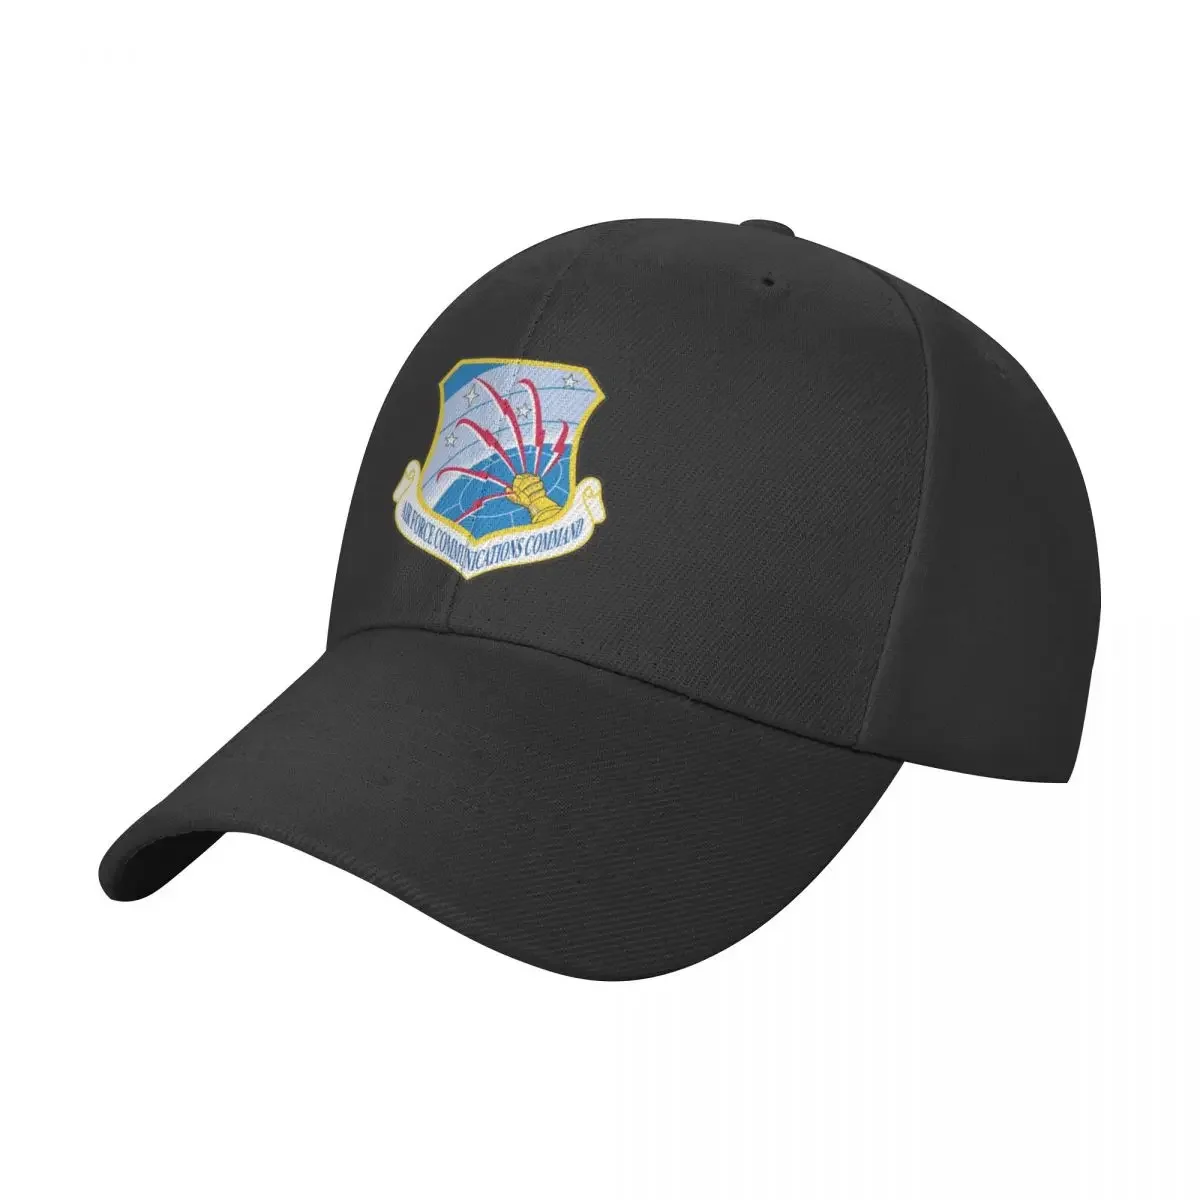 

Air Force Communications Command Baseball Cap dad hat Hat Man For The Sun Anime Golf Women Men's